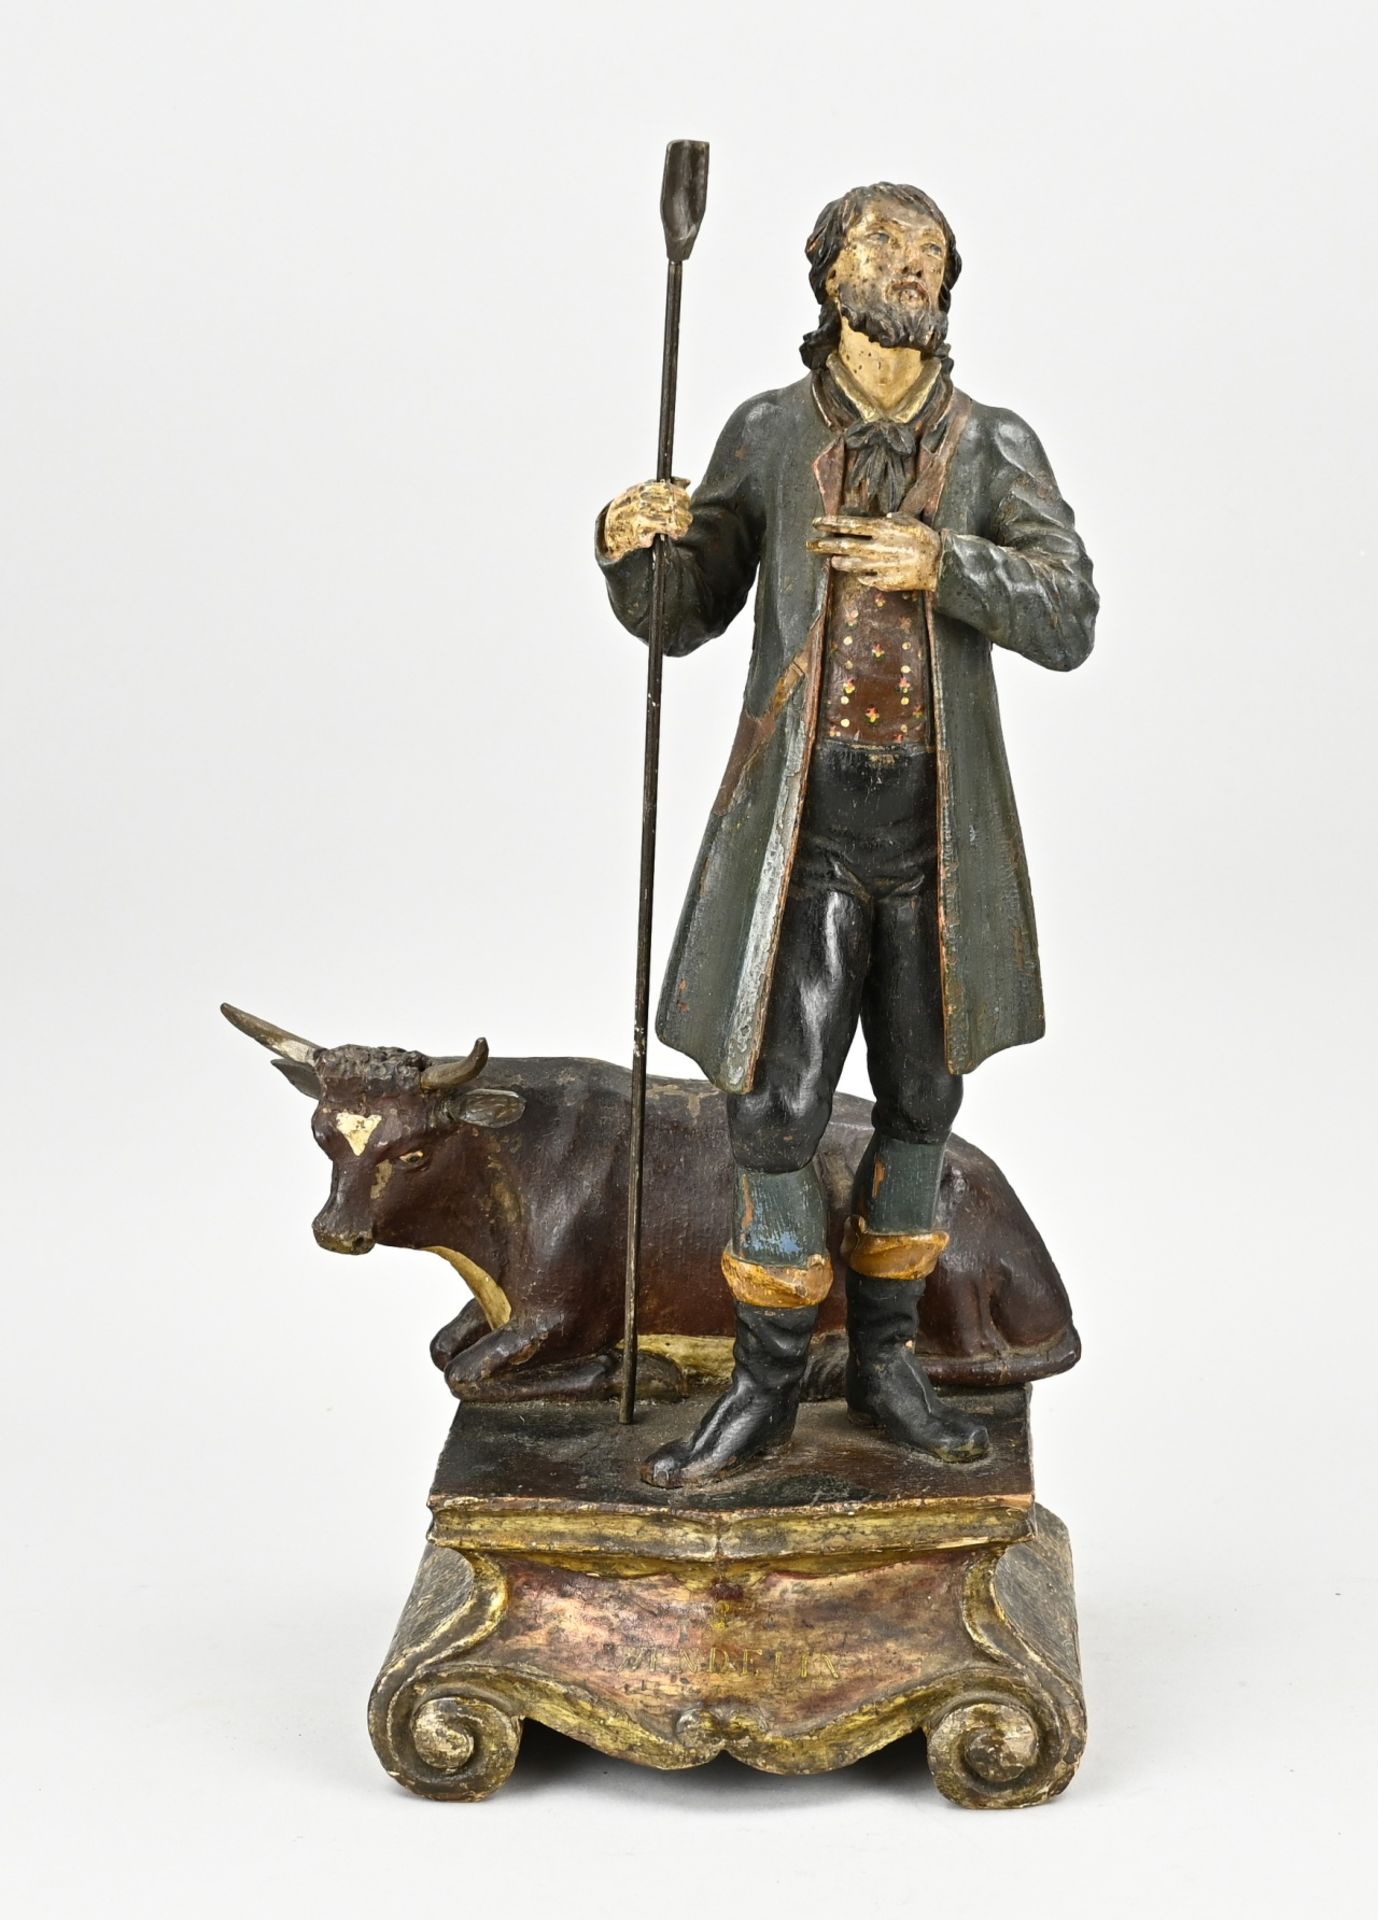 18th century wooden statue, Shepherd